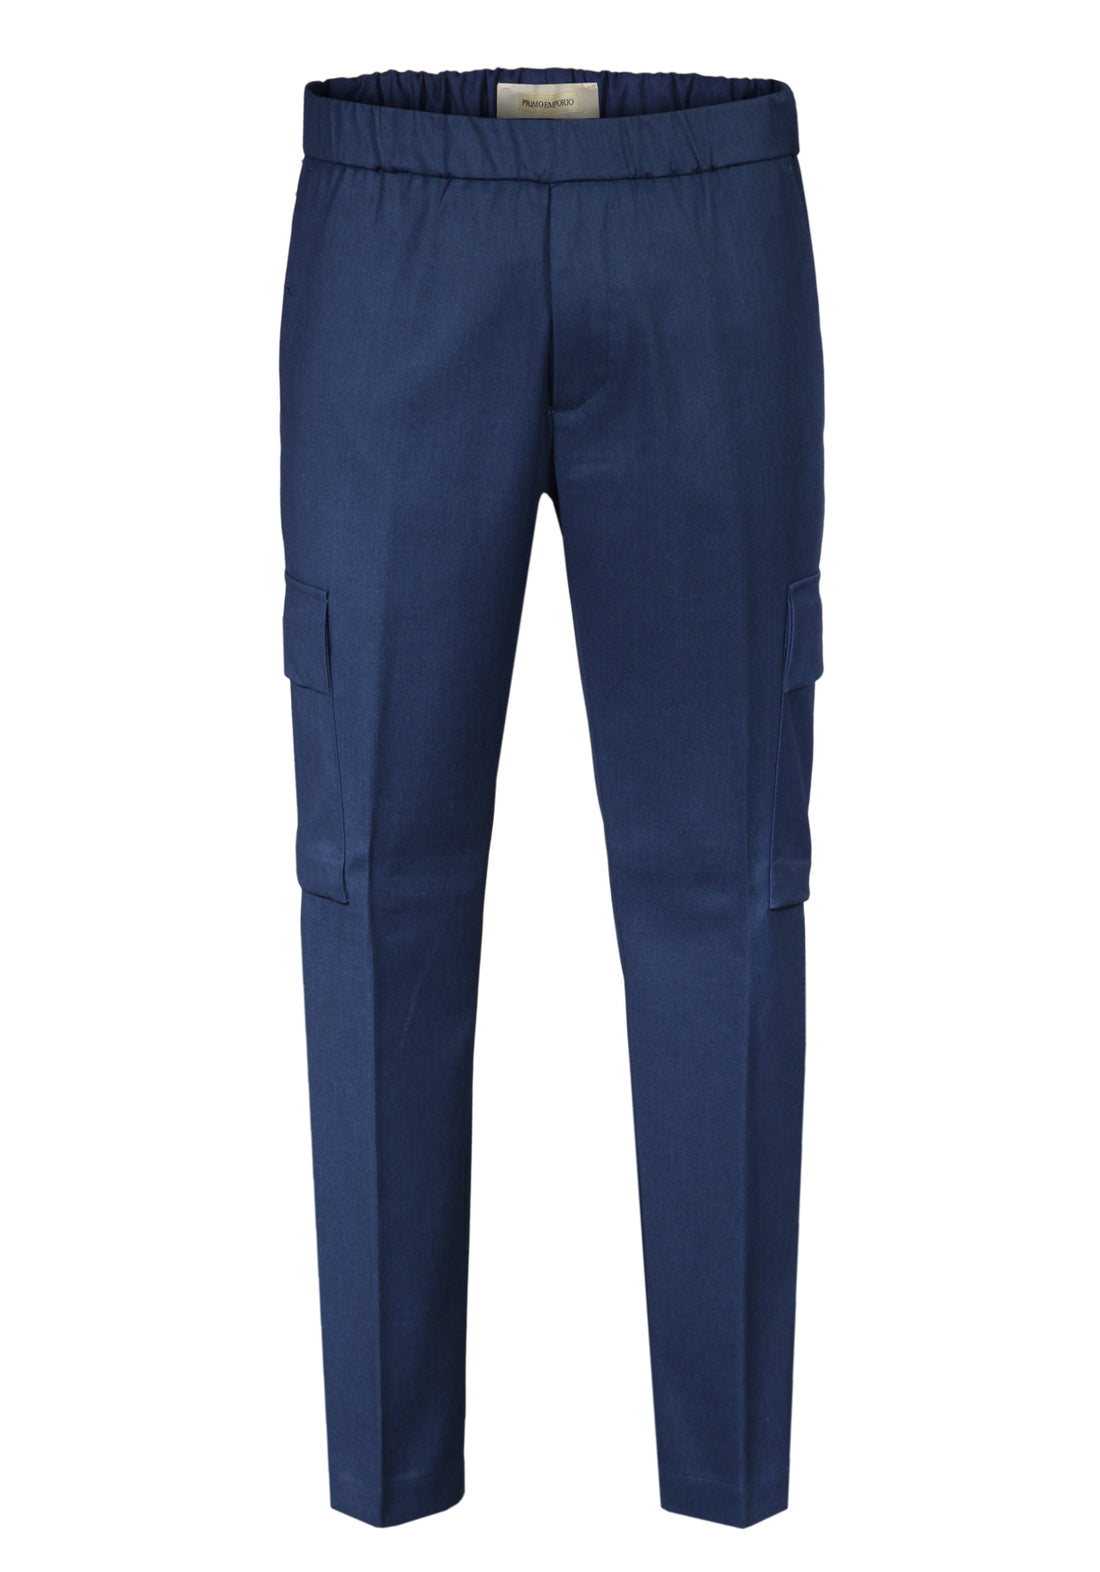 Pantalone fresco Lana con Tascone laterali - Blue